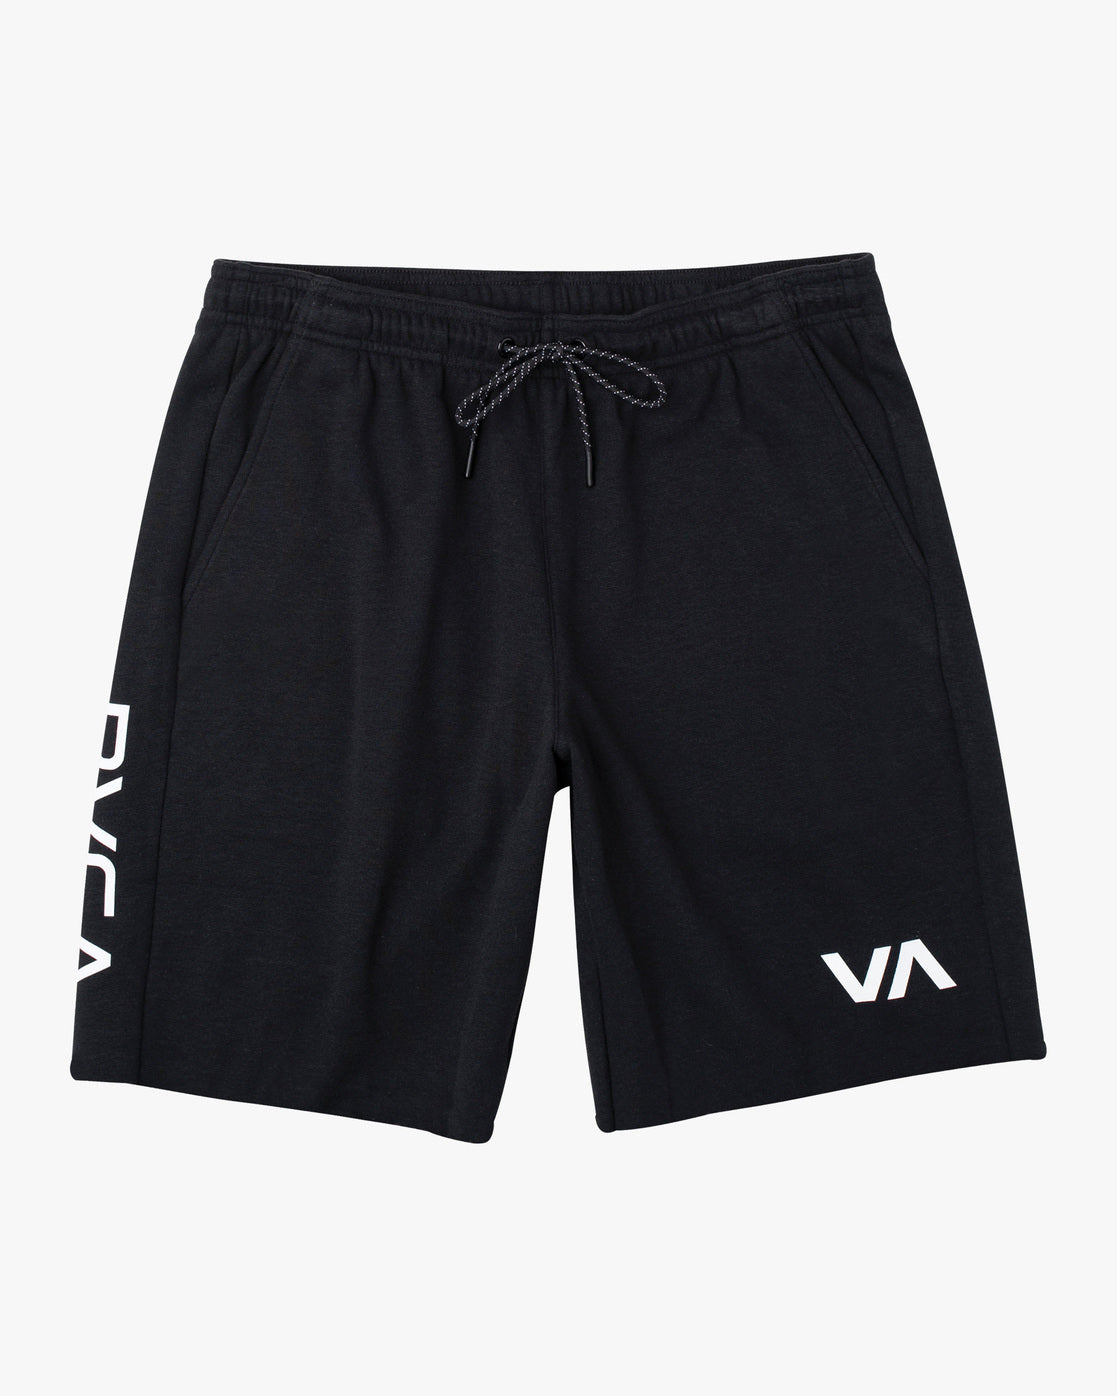 Boys VA Sport Elastic Shorts IV 17 - Black